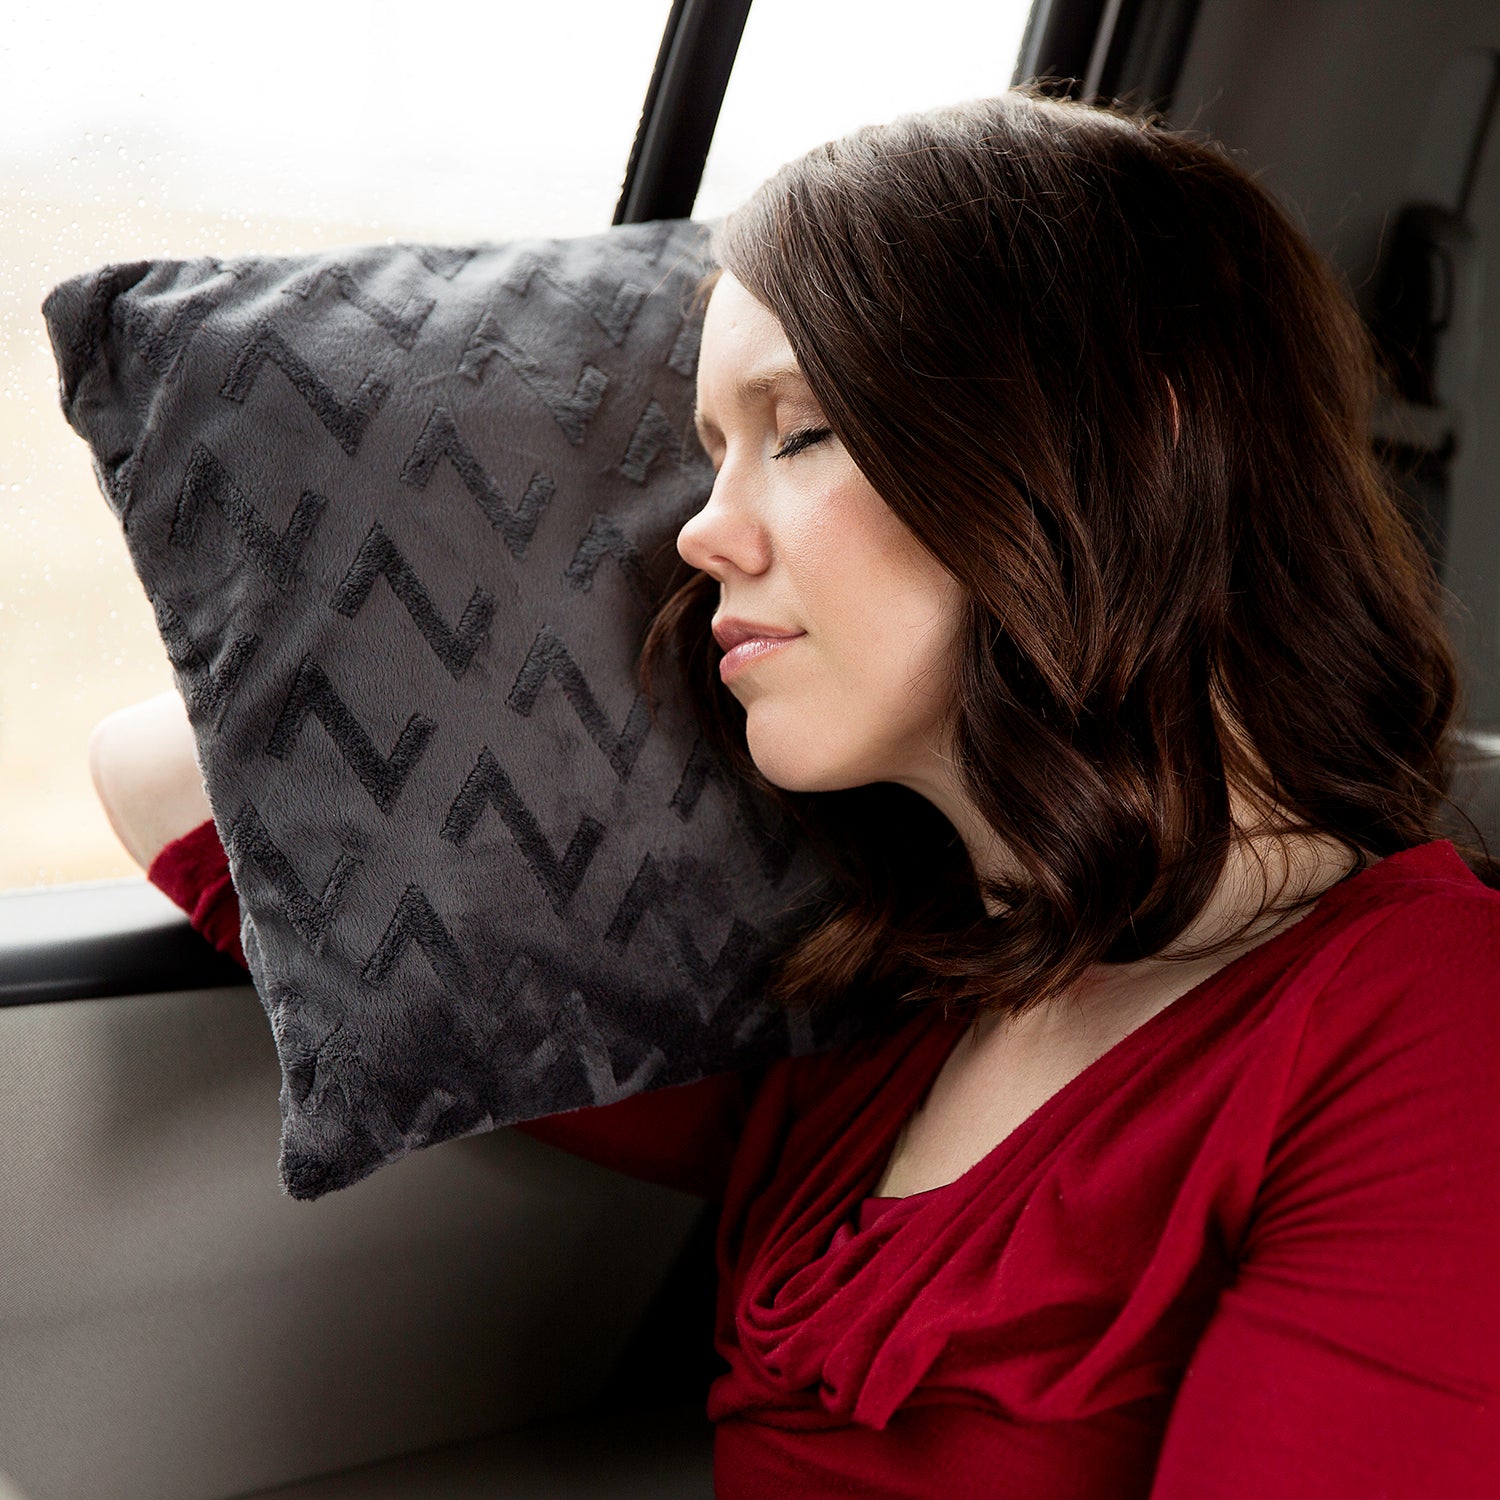 Travel Dough® Pillow - Ultimate Comfort Sleep